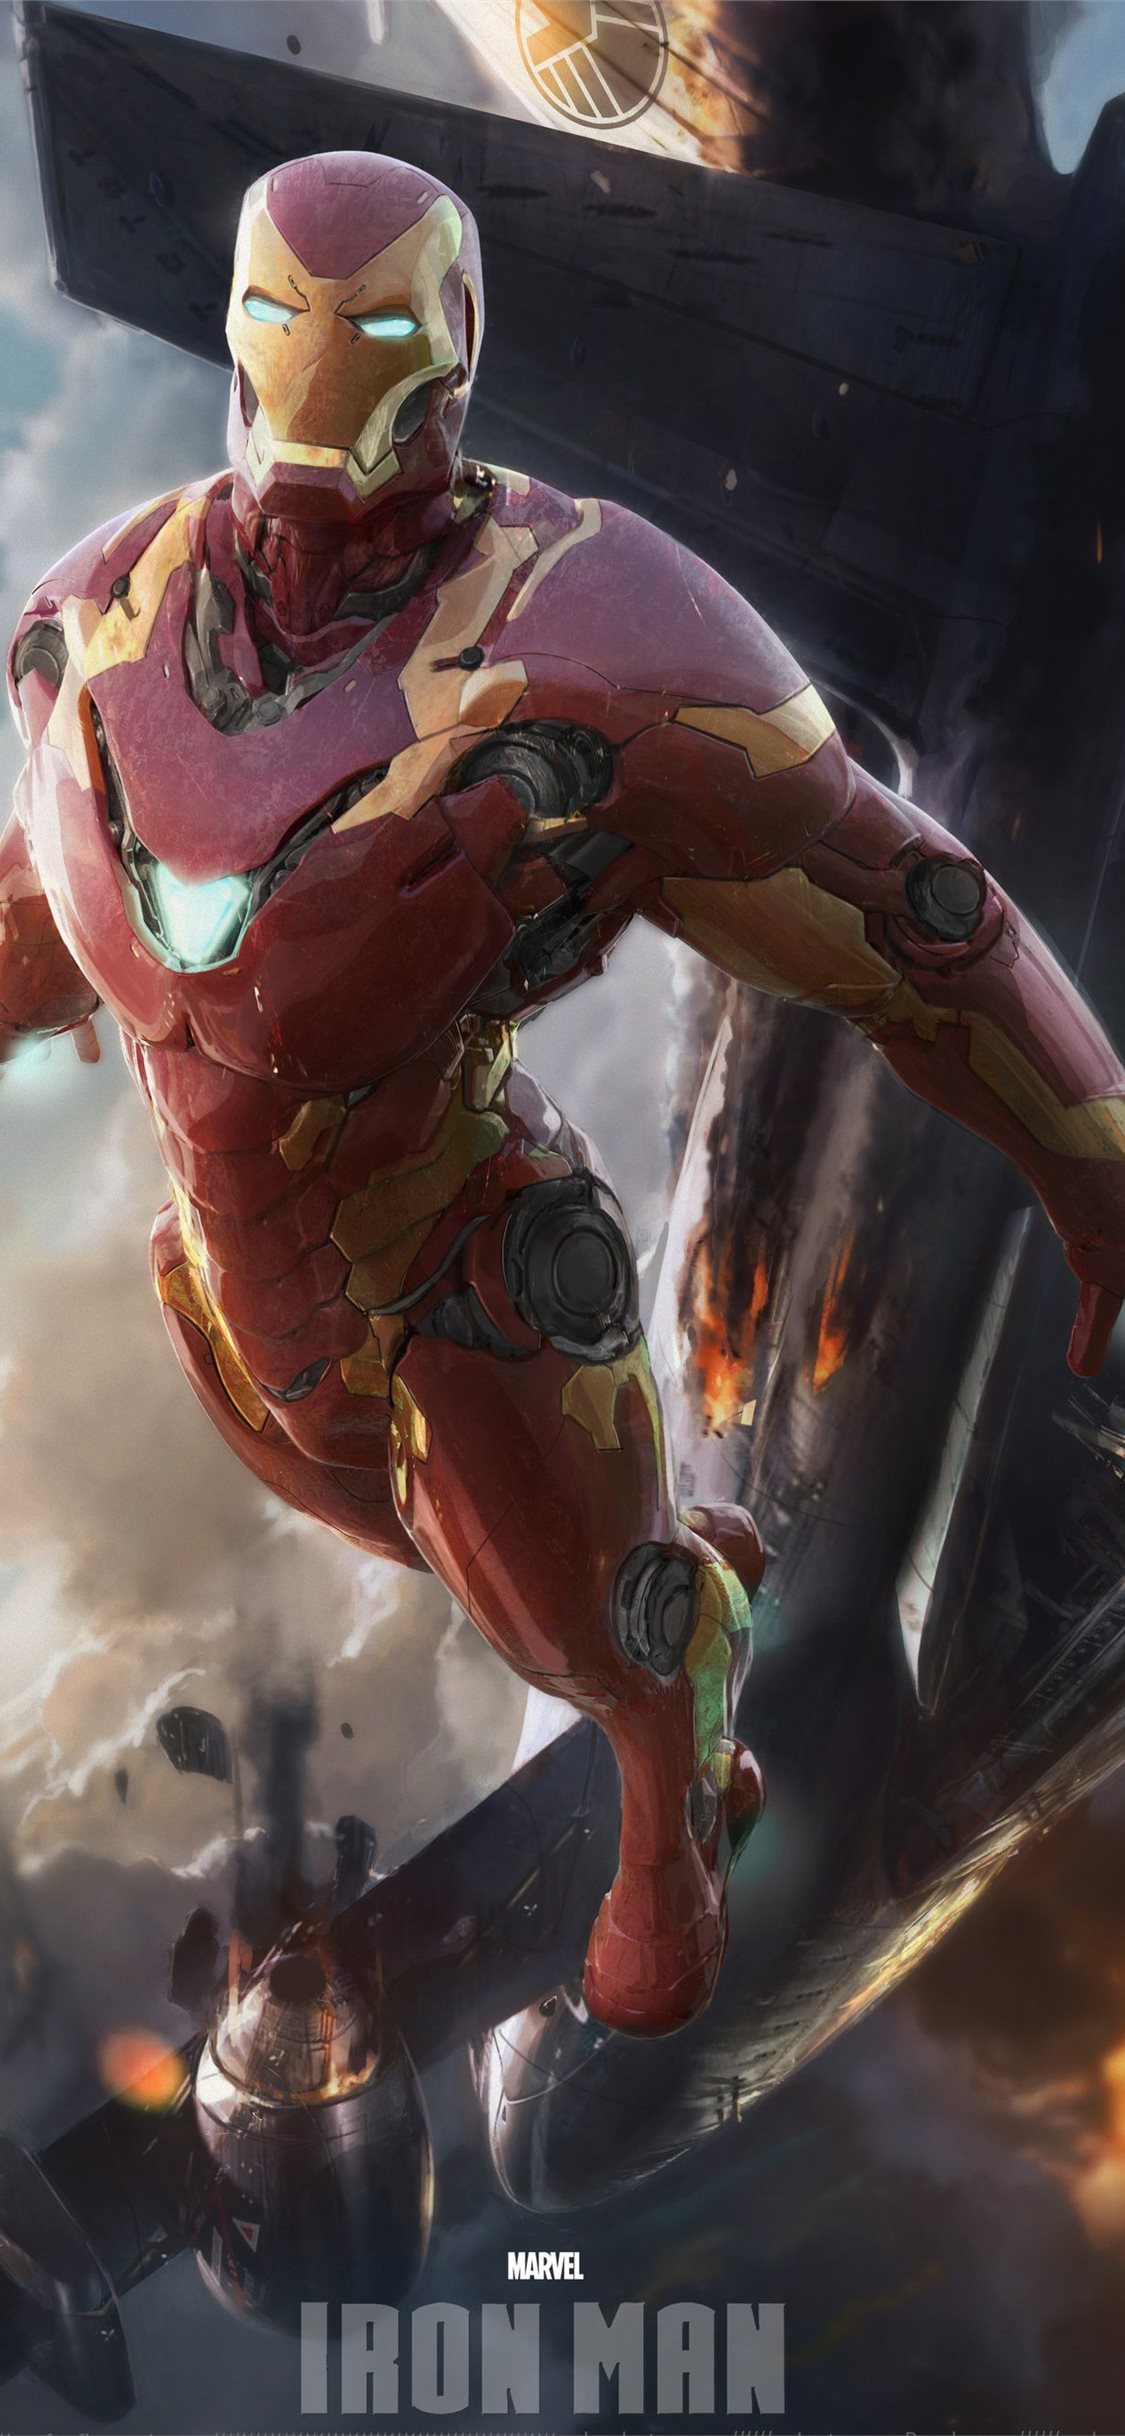 Iron Man 3 Iphone Wallpapers Free Download